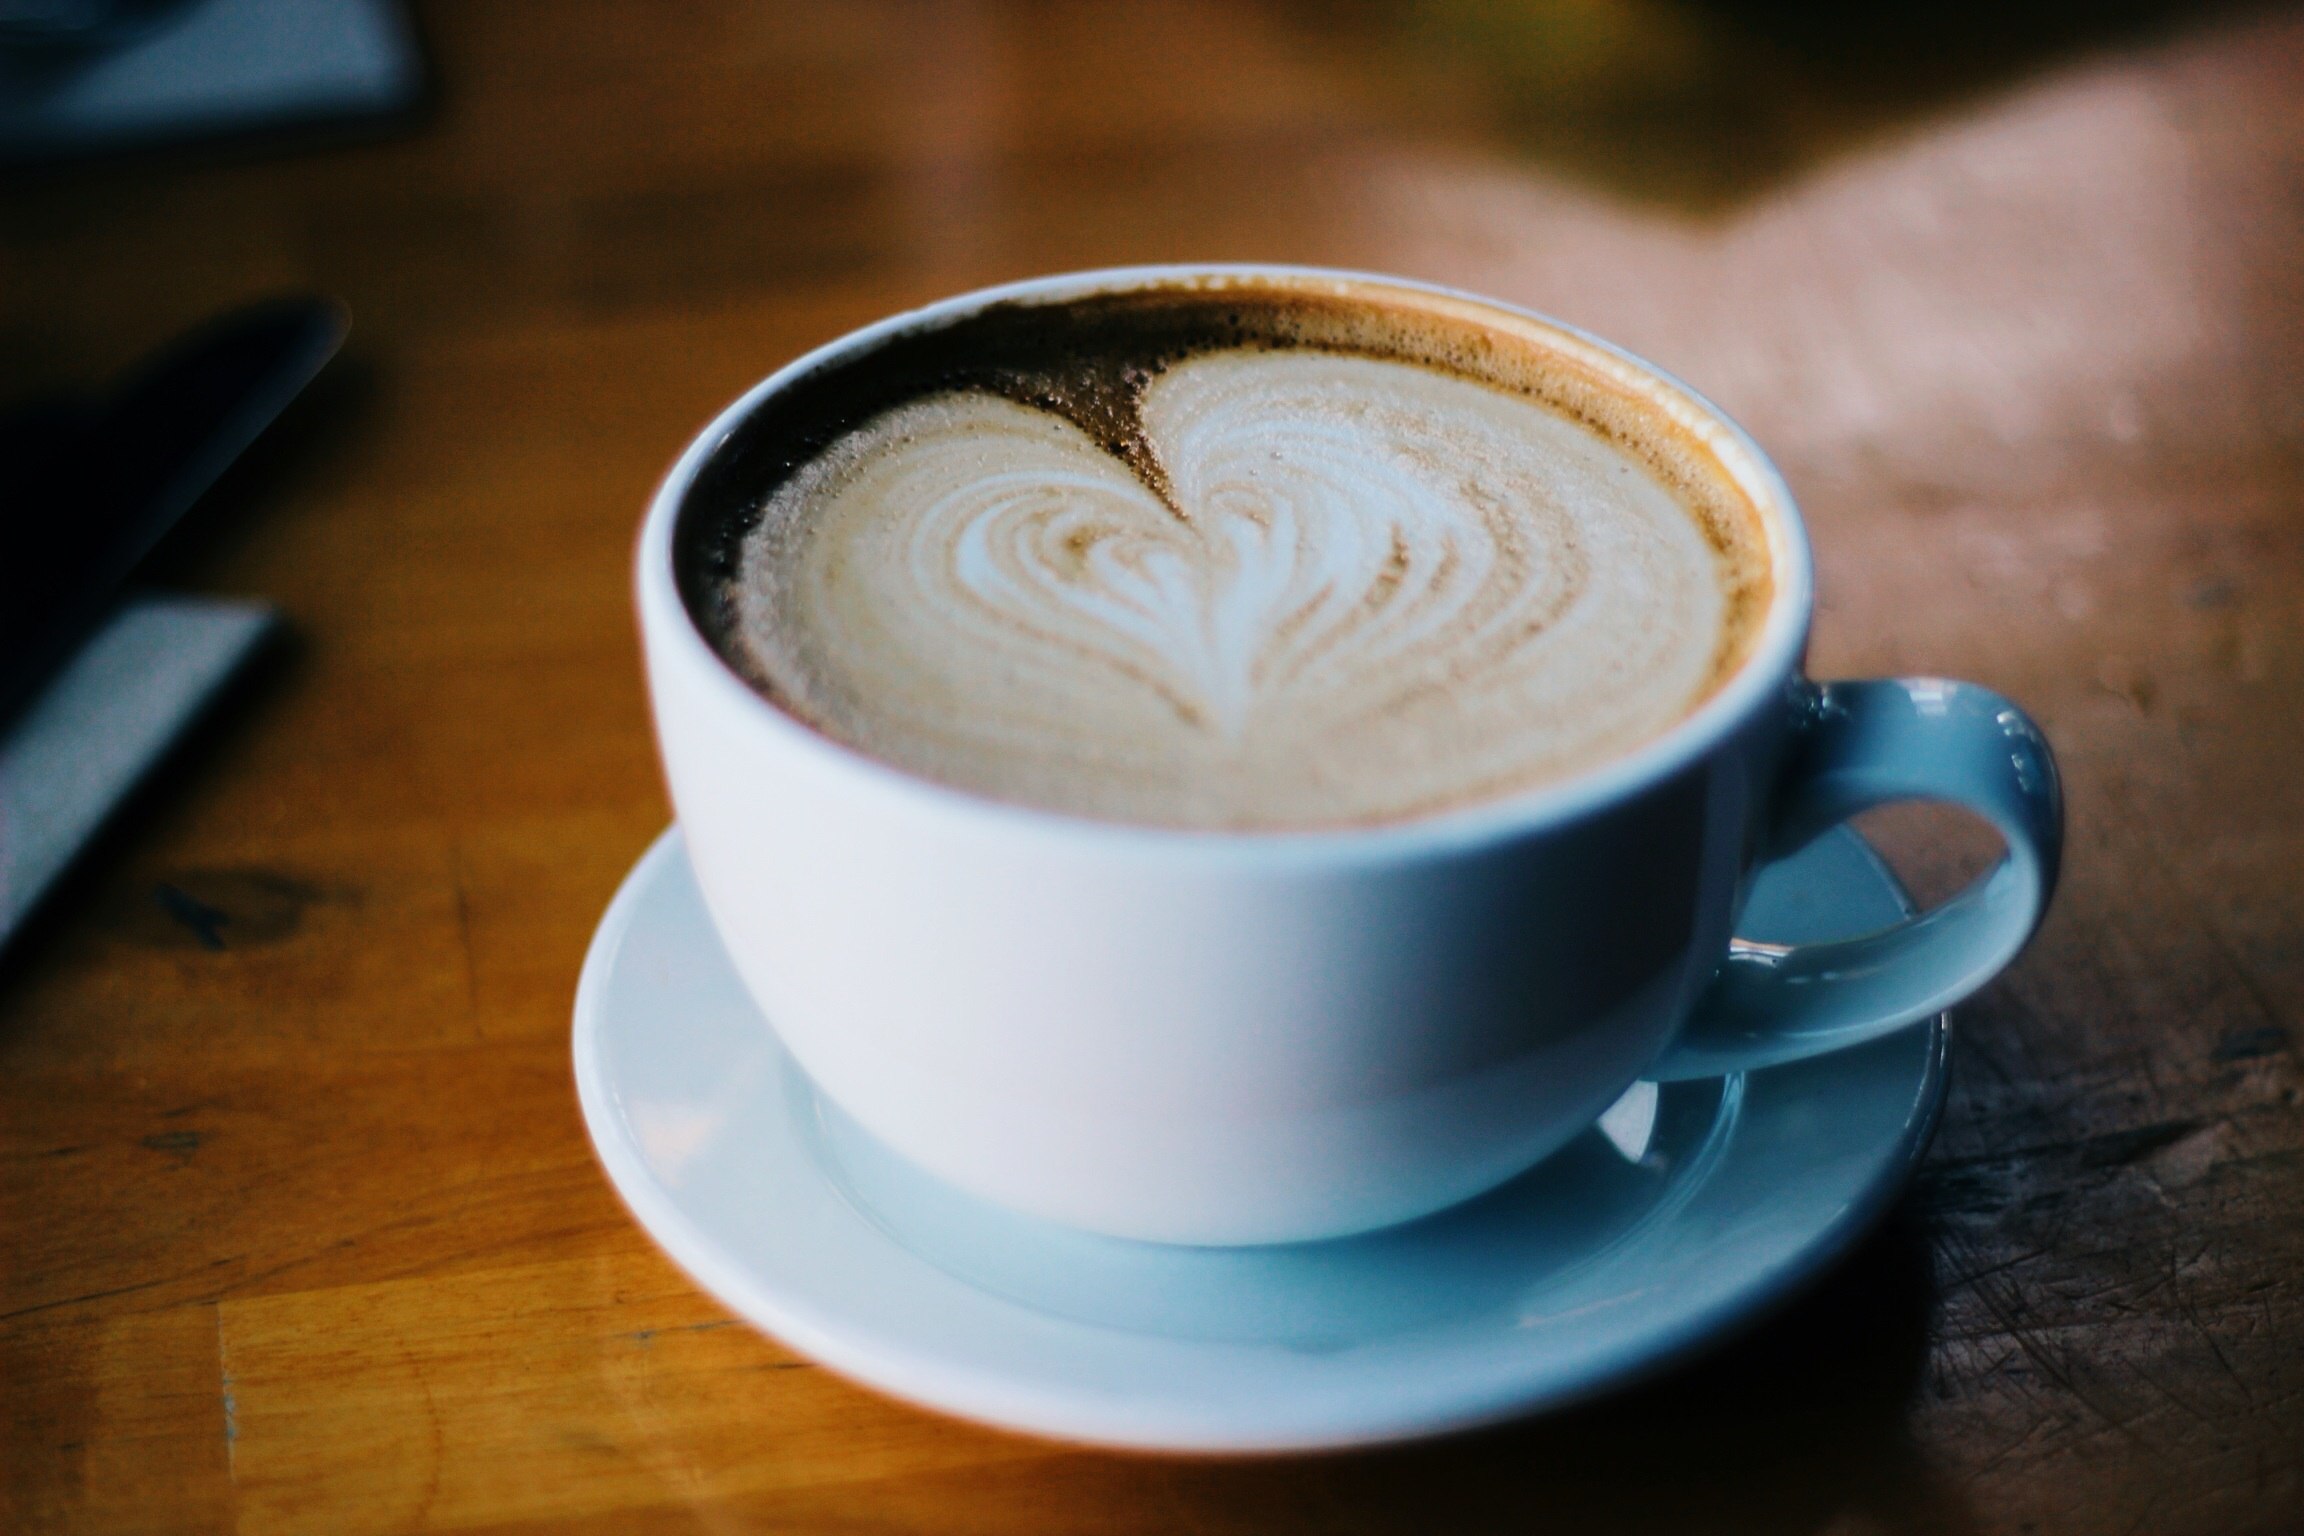 latte coffee with heart-shaped cream swirl